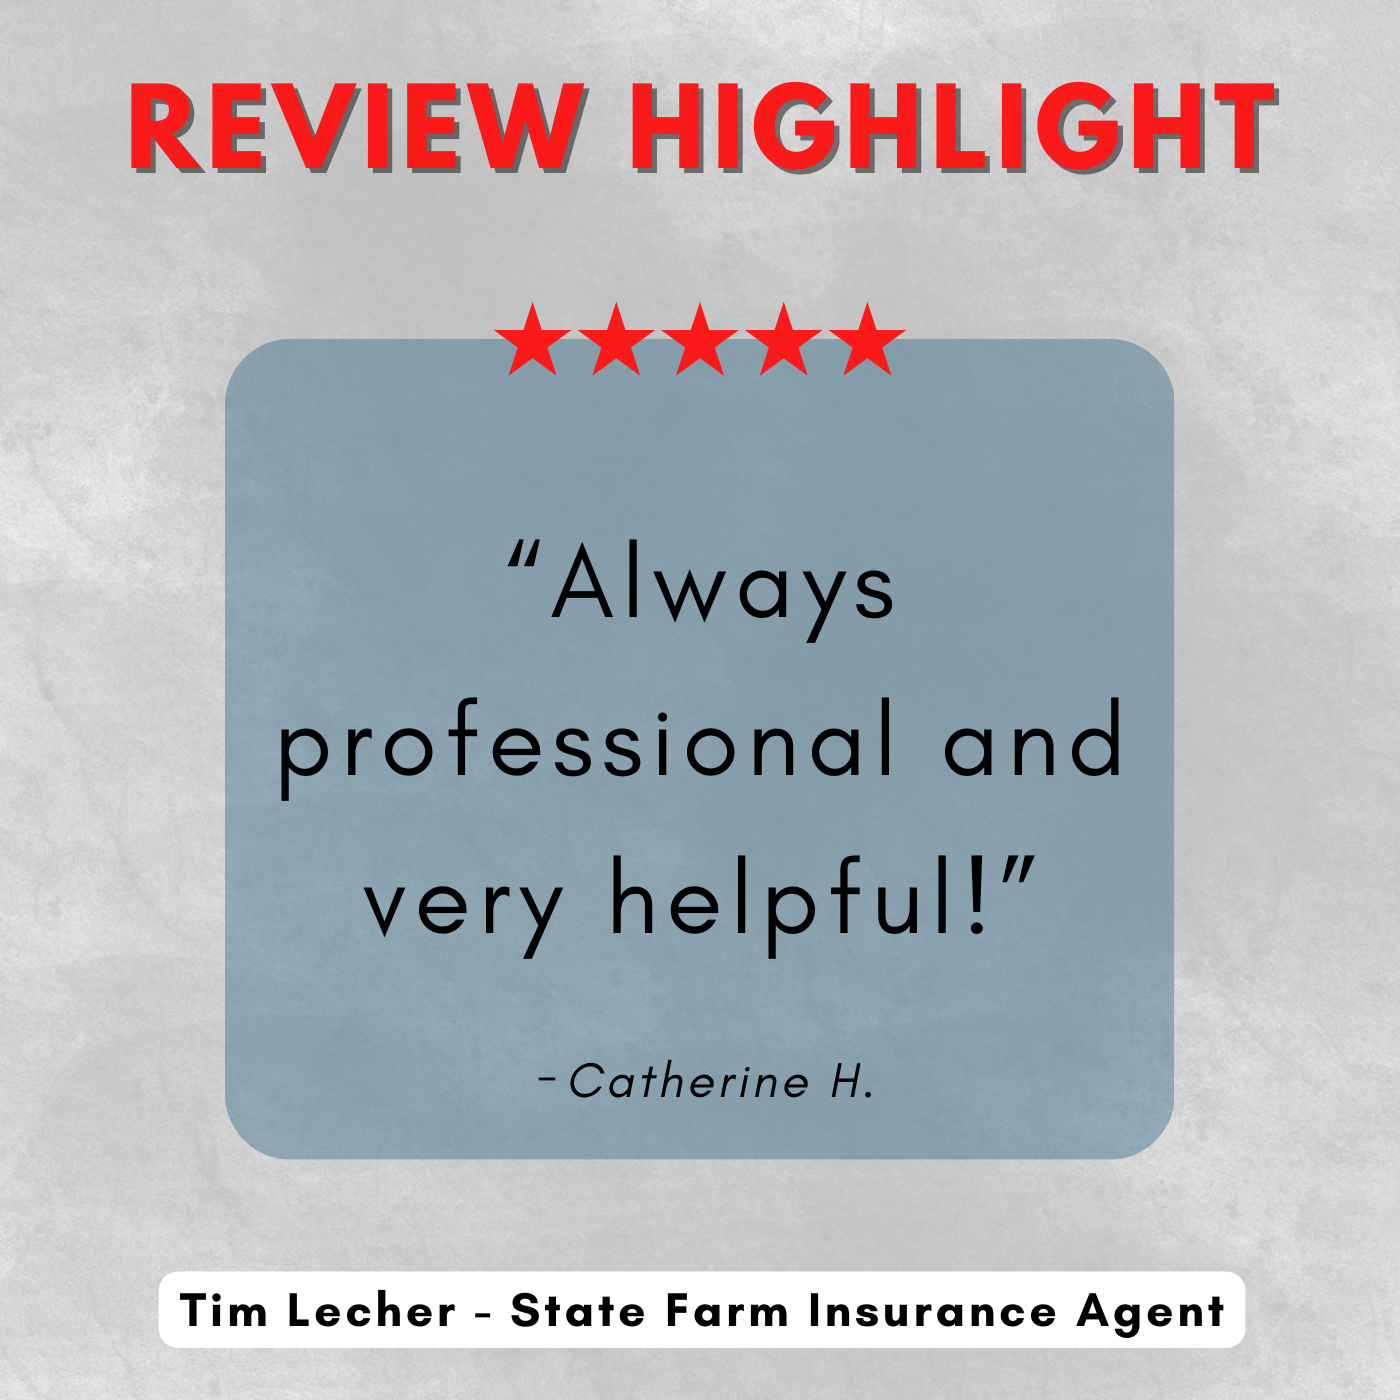 Tim Lecher - State Farm Insurance Agent
Review highlight